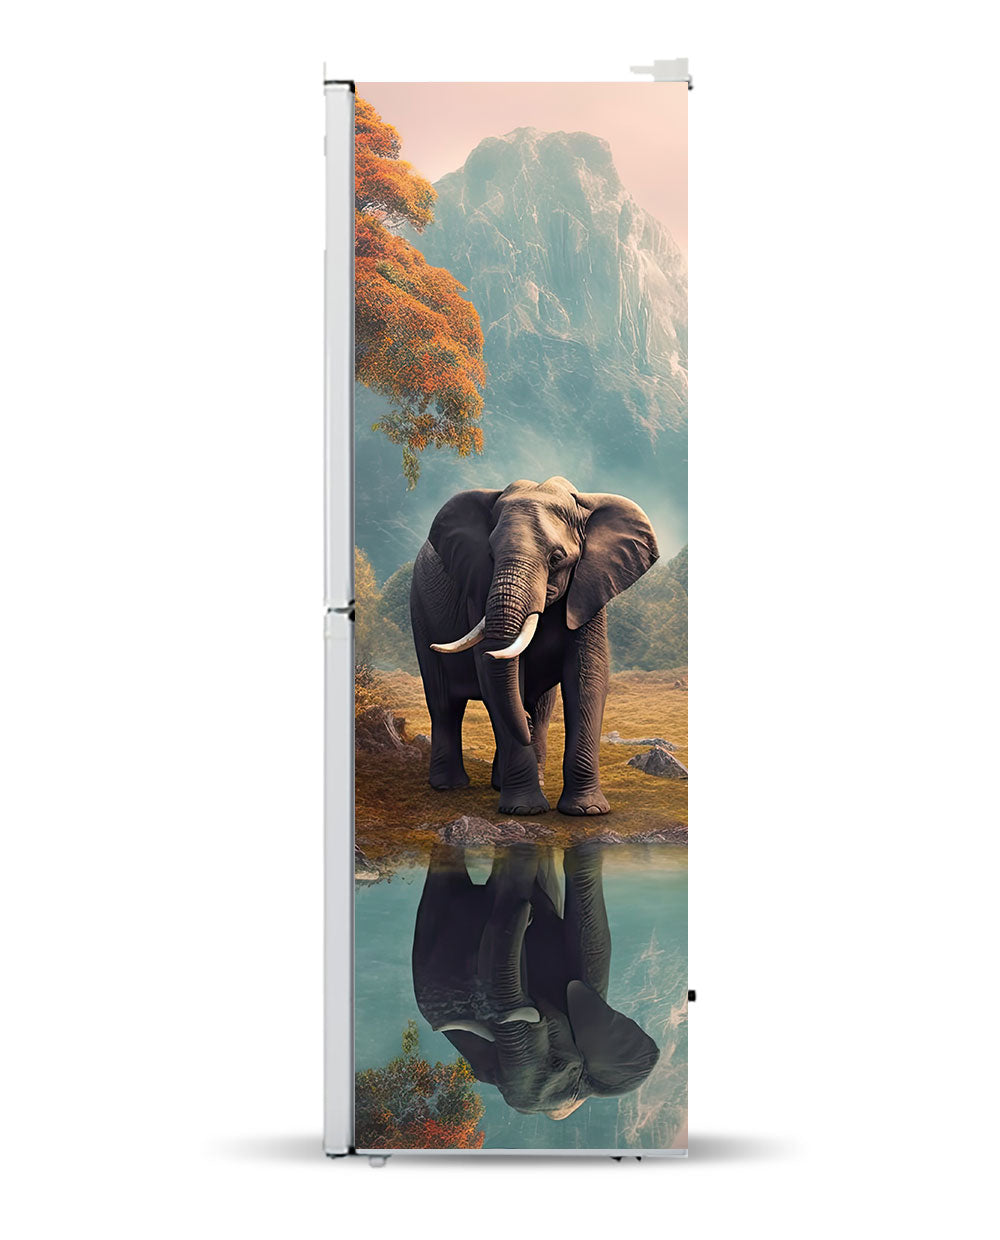 Elefante colorido